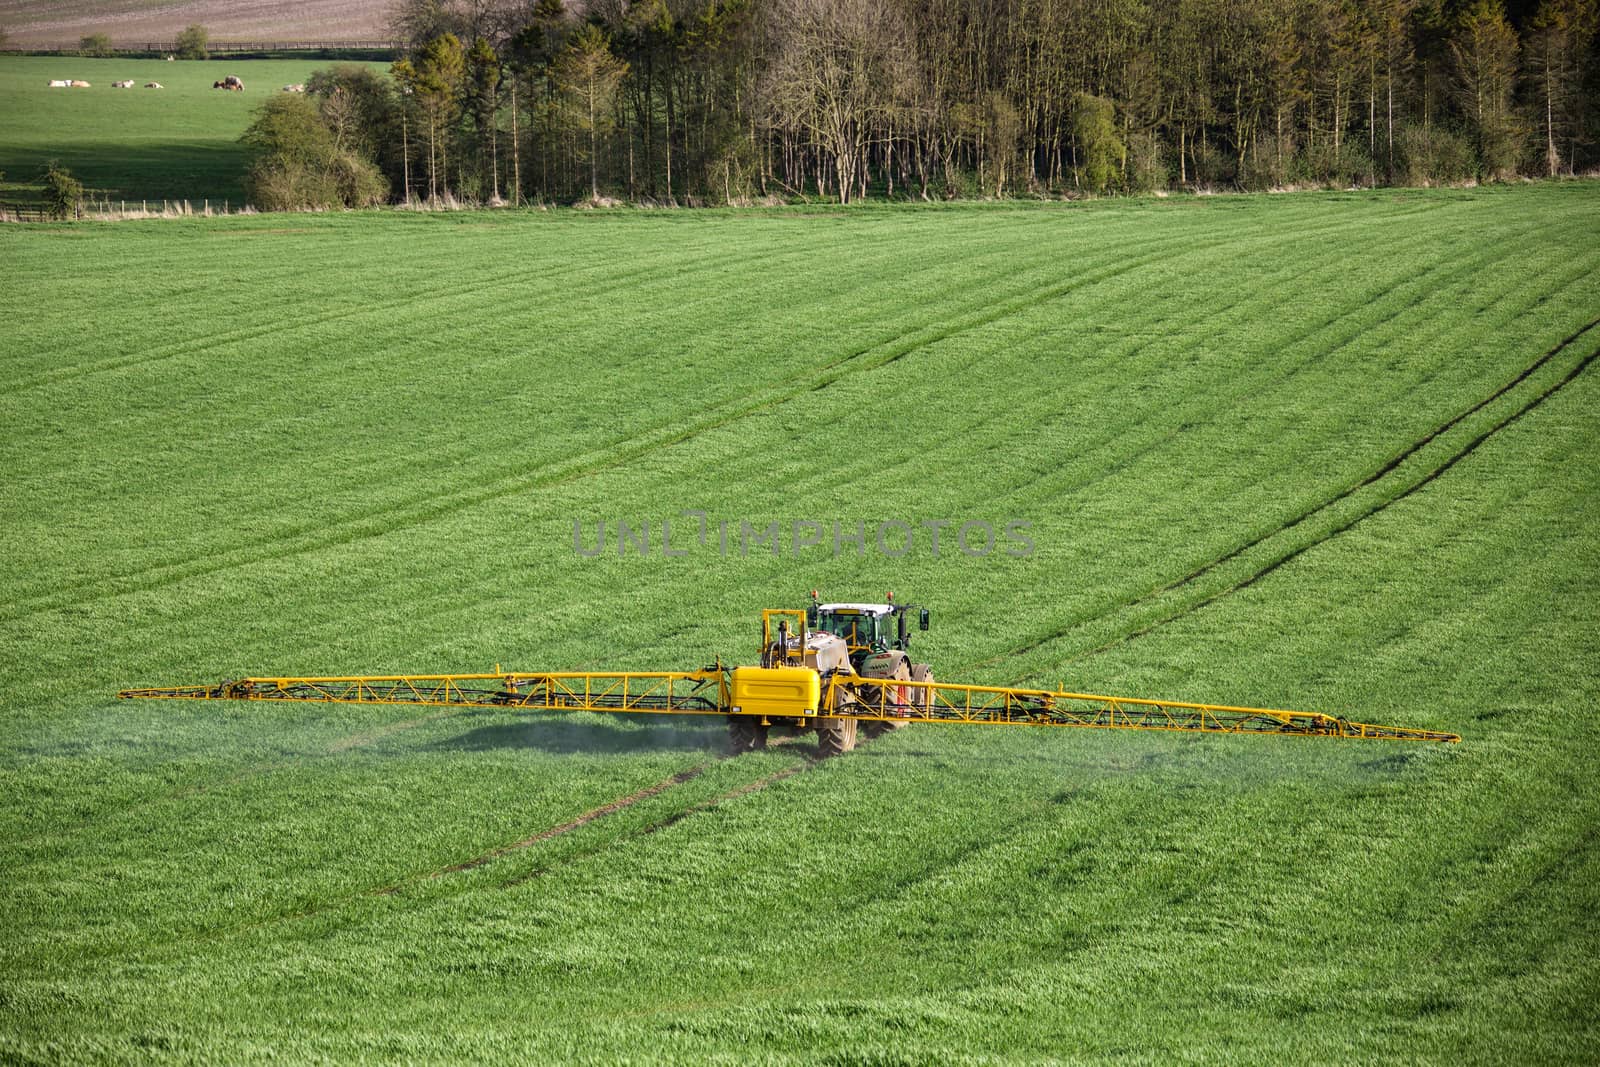 Agriculture - Spraying fertilizer on wheat crop - North Yorkshire - England.